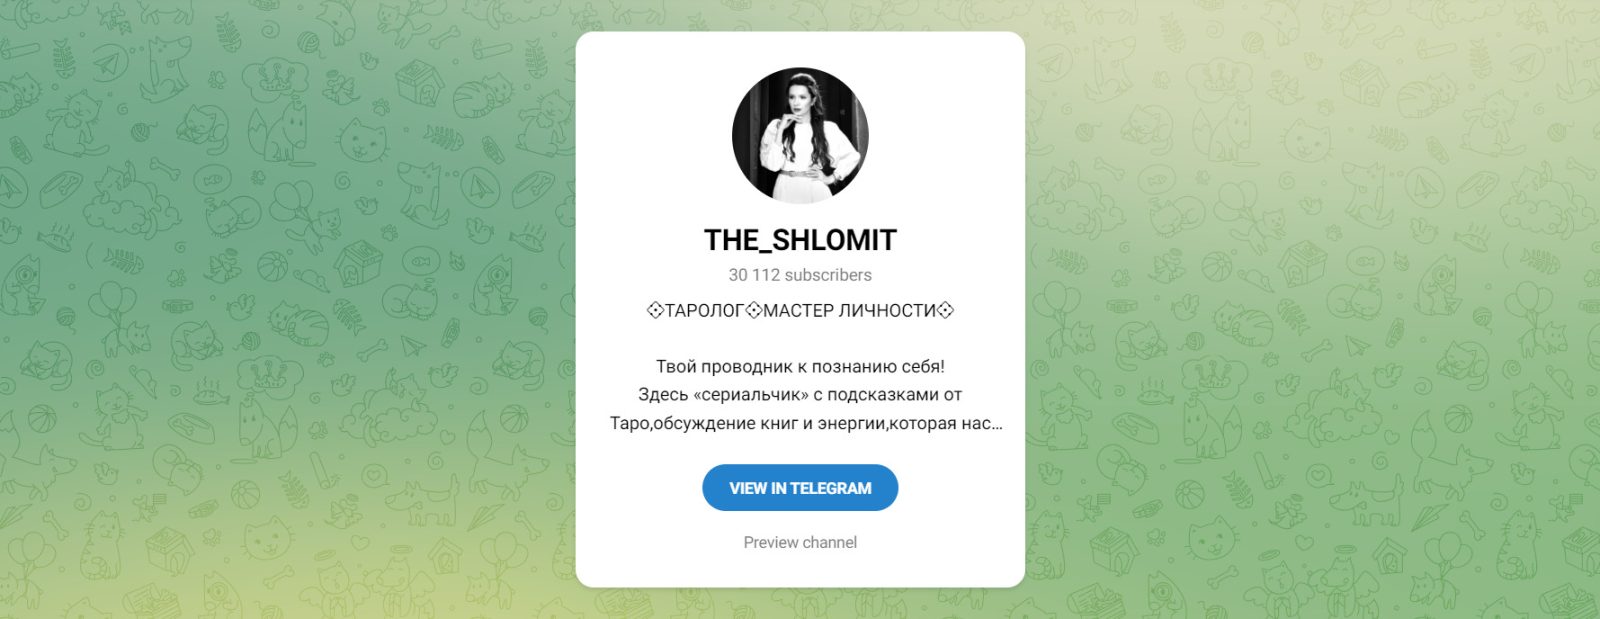 Таролог The Shlomit телеграм